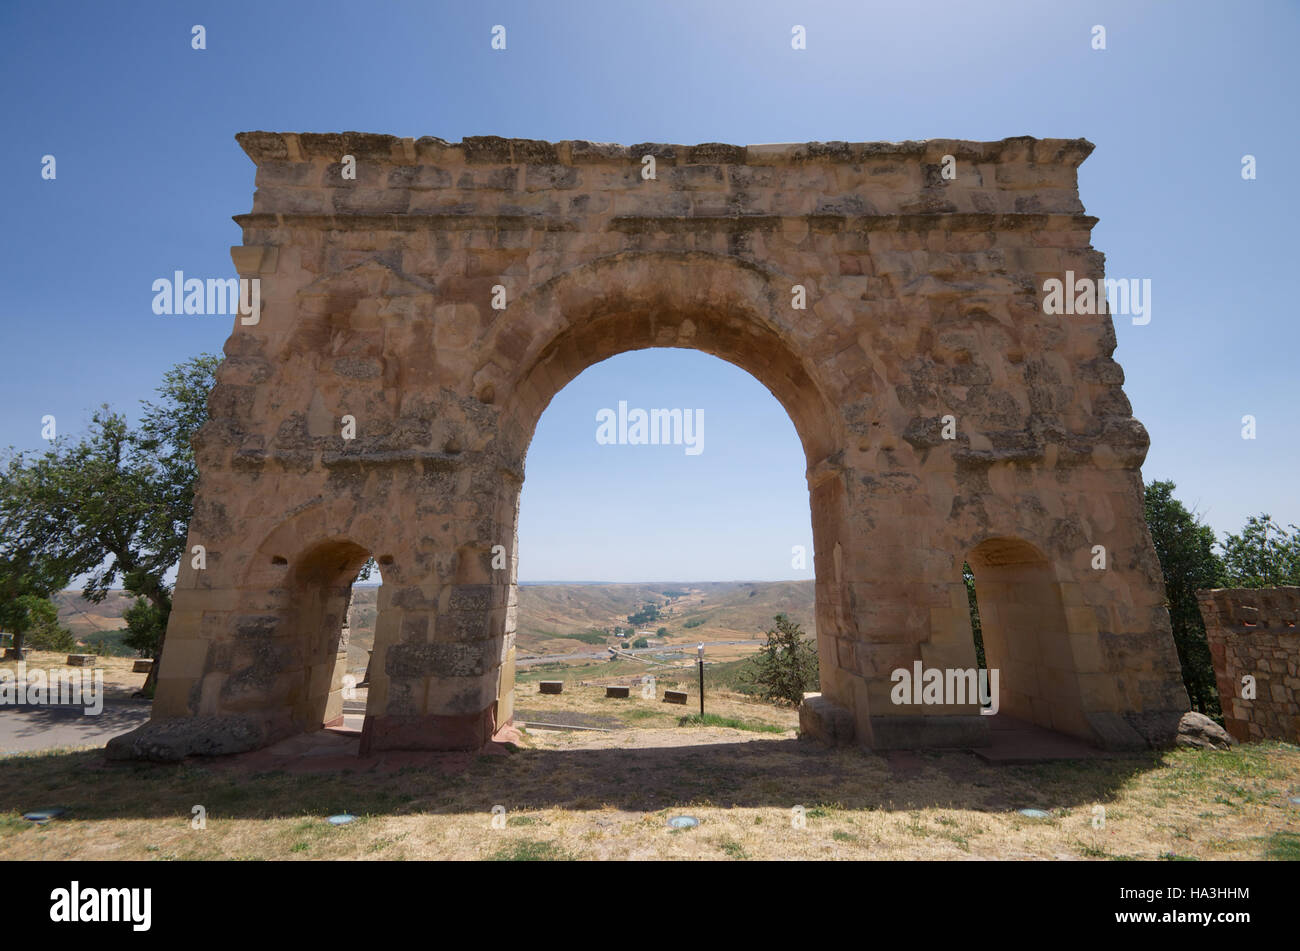 The Roman Arch of Medinaceli, Spain Stock Photo